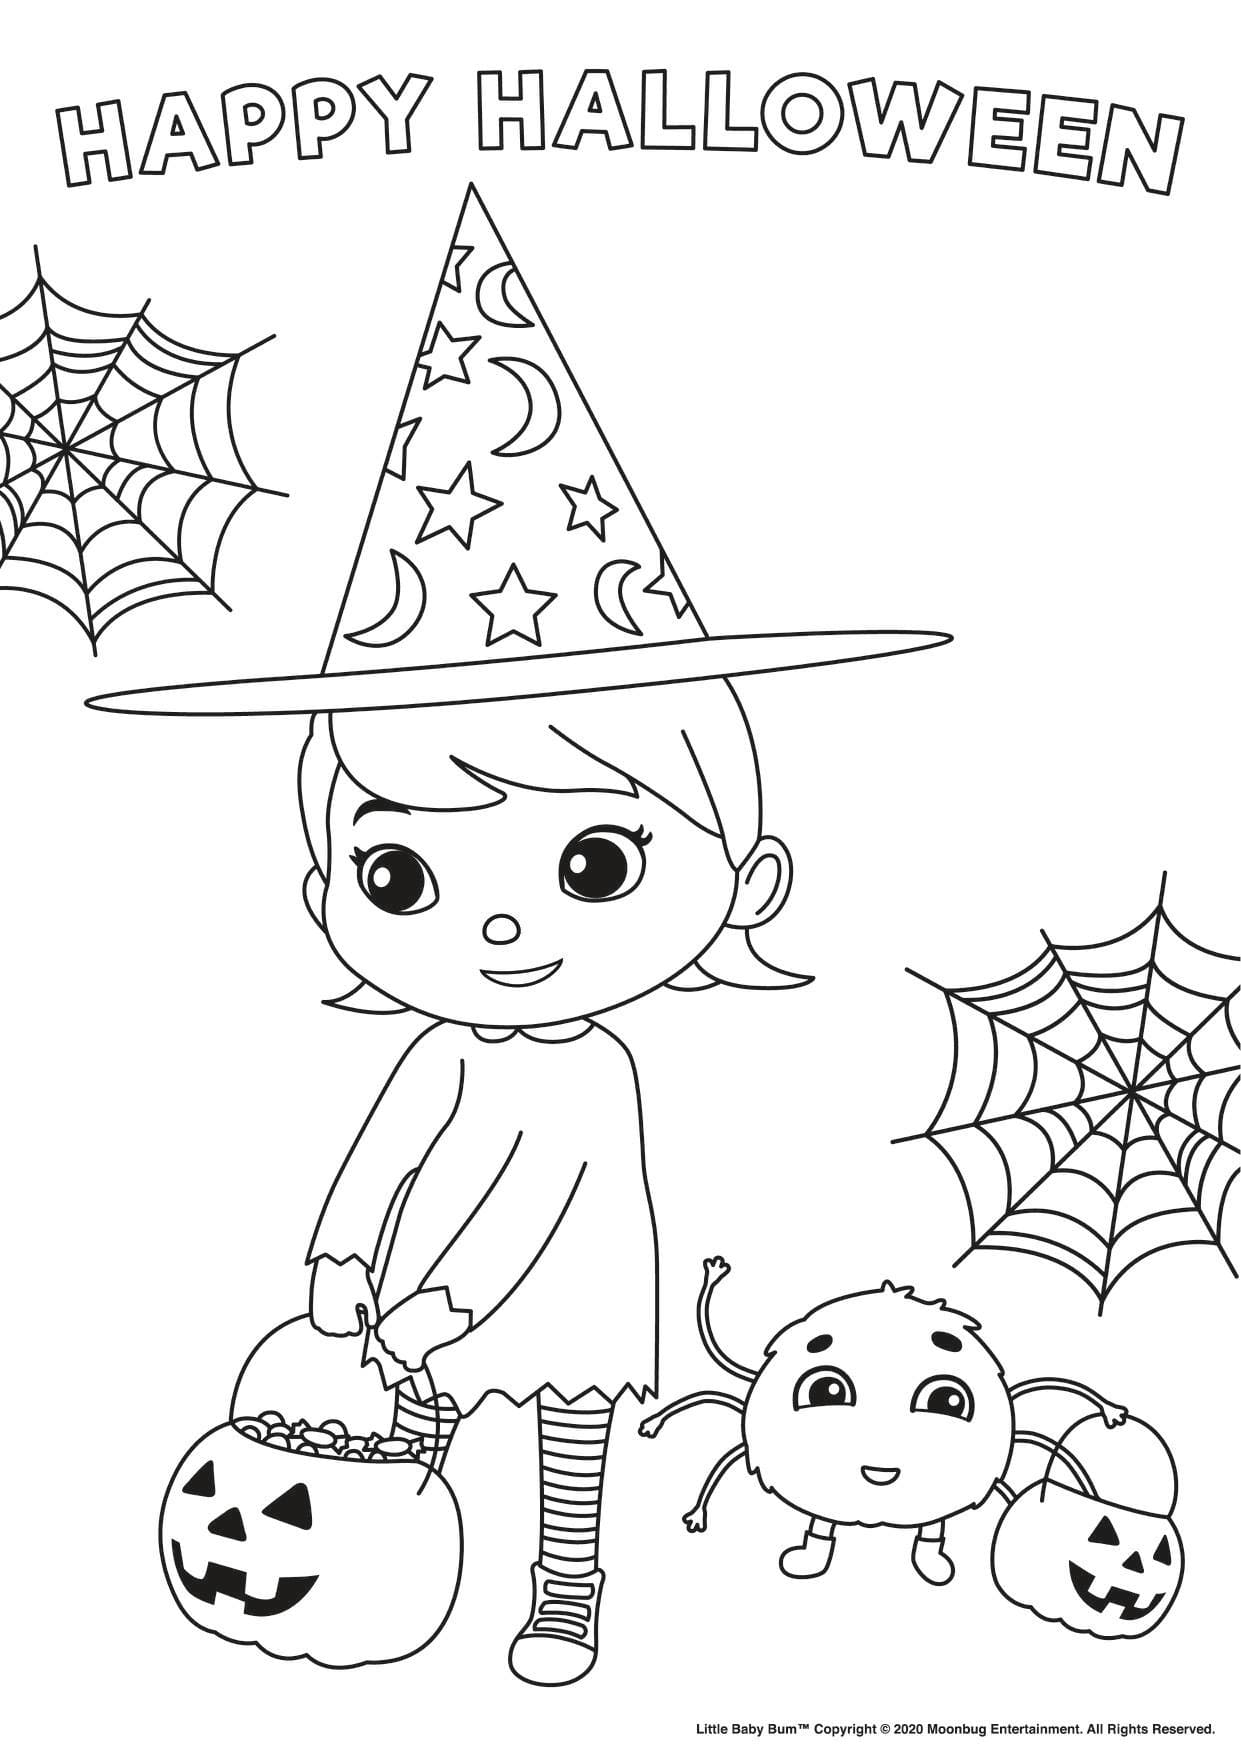 Para Colorear Little Baby Bum Feliz Halloween!